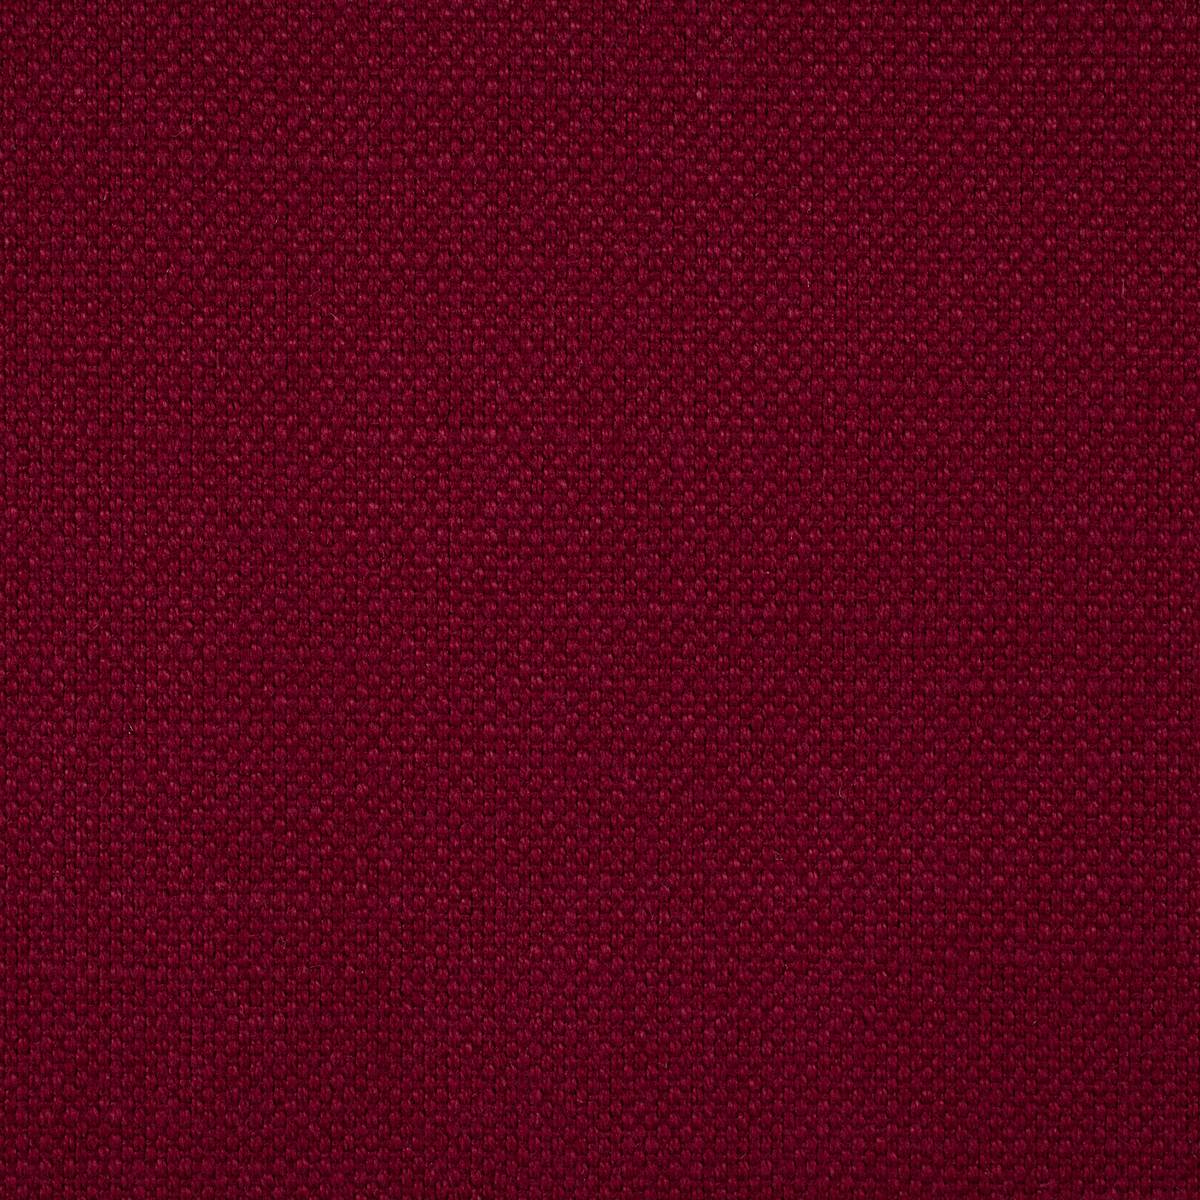 Arley Bordeaux Fabric by Sanderson